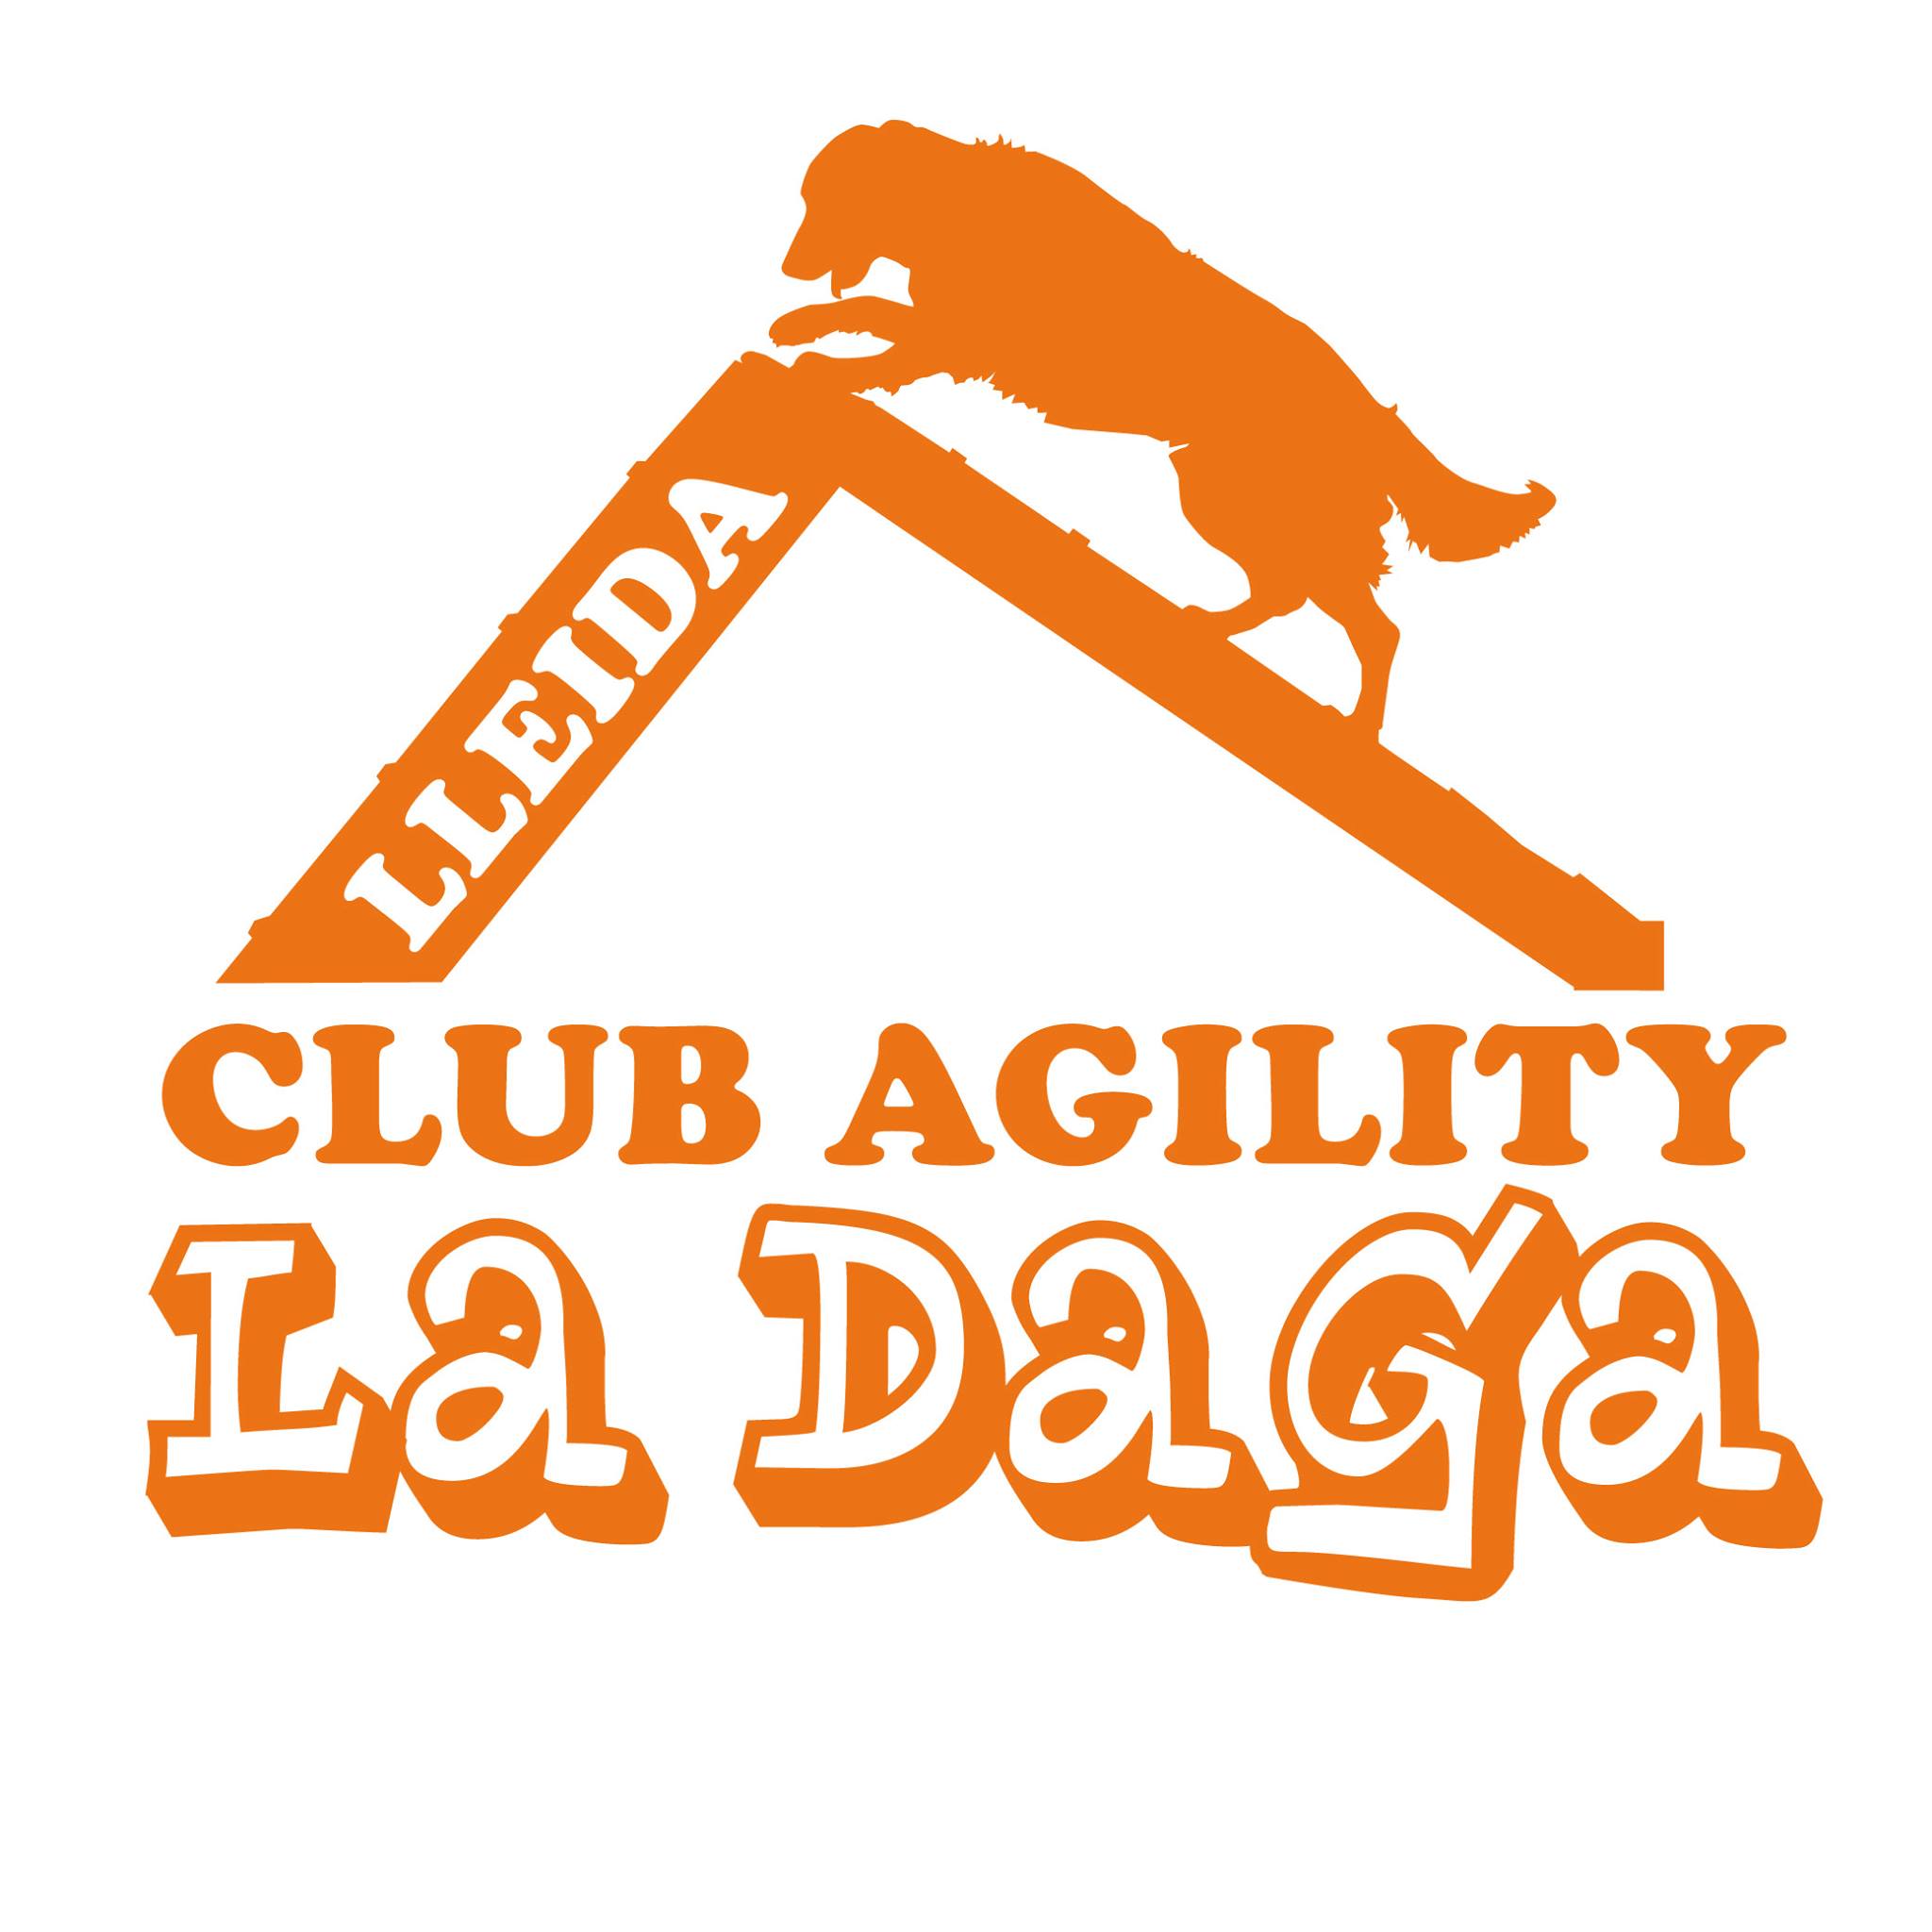 Club Agility La Daga